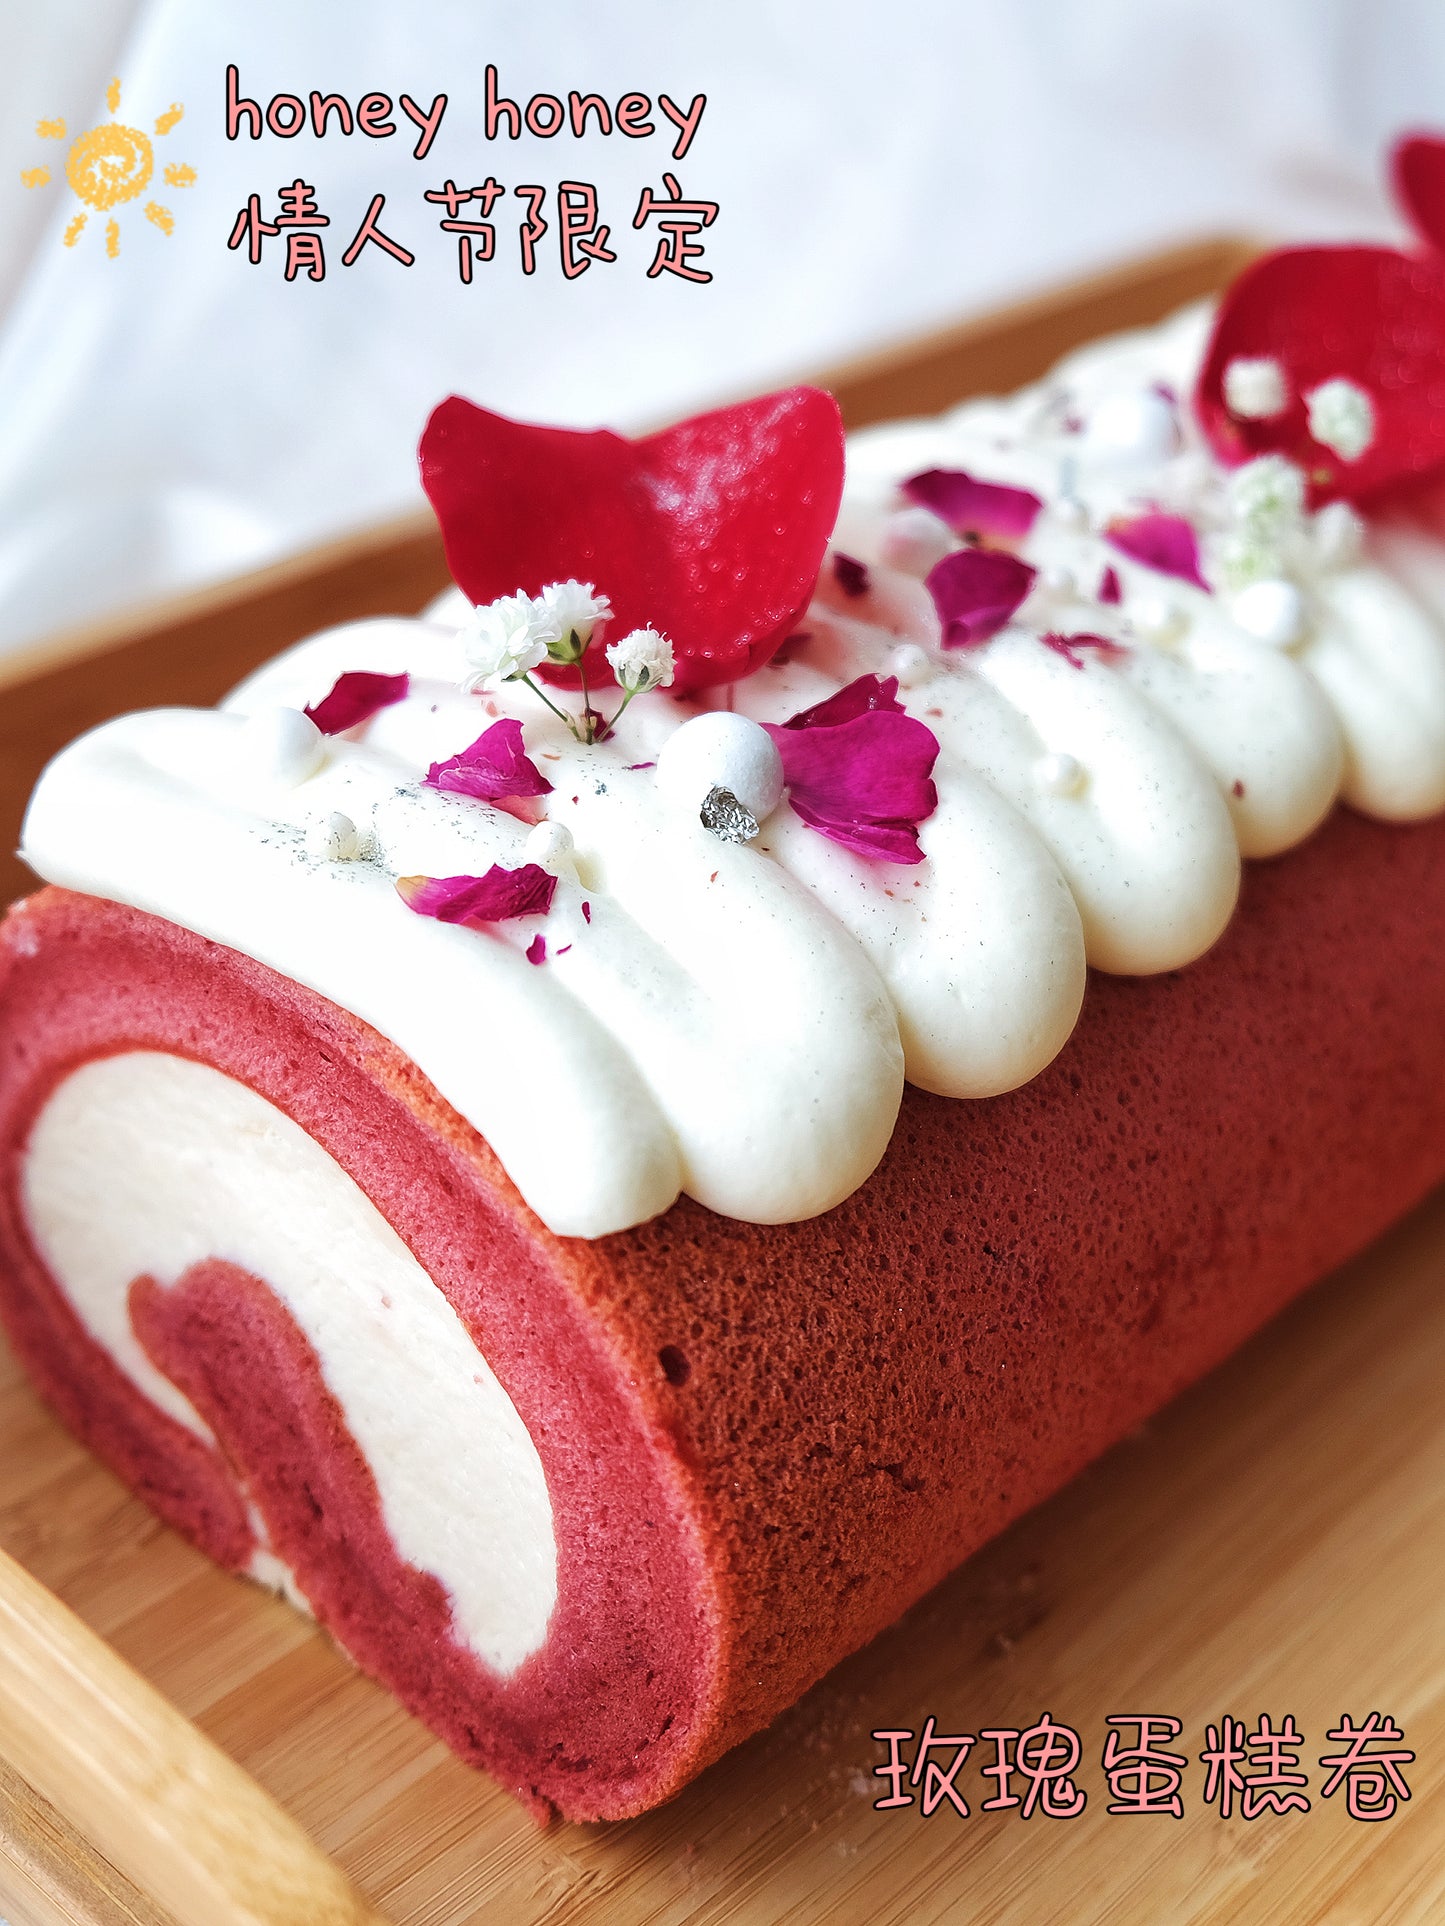 Rose Roll Cake